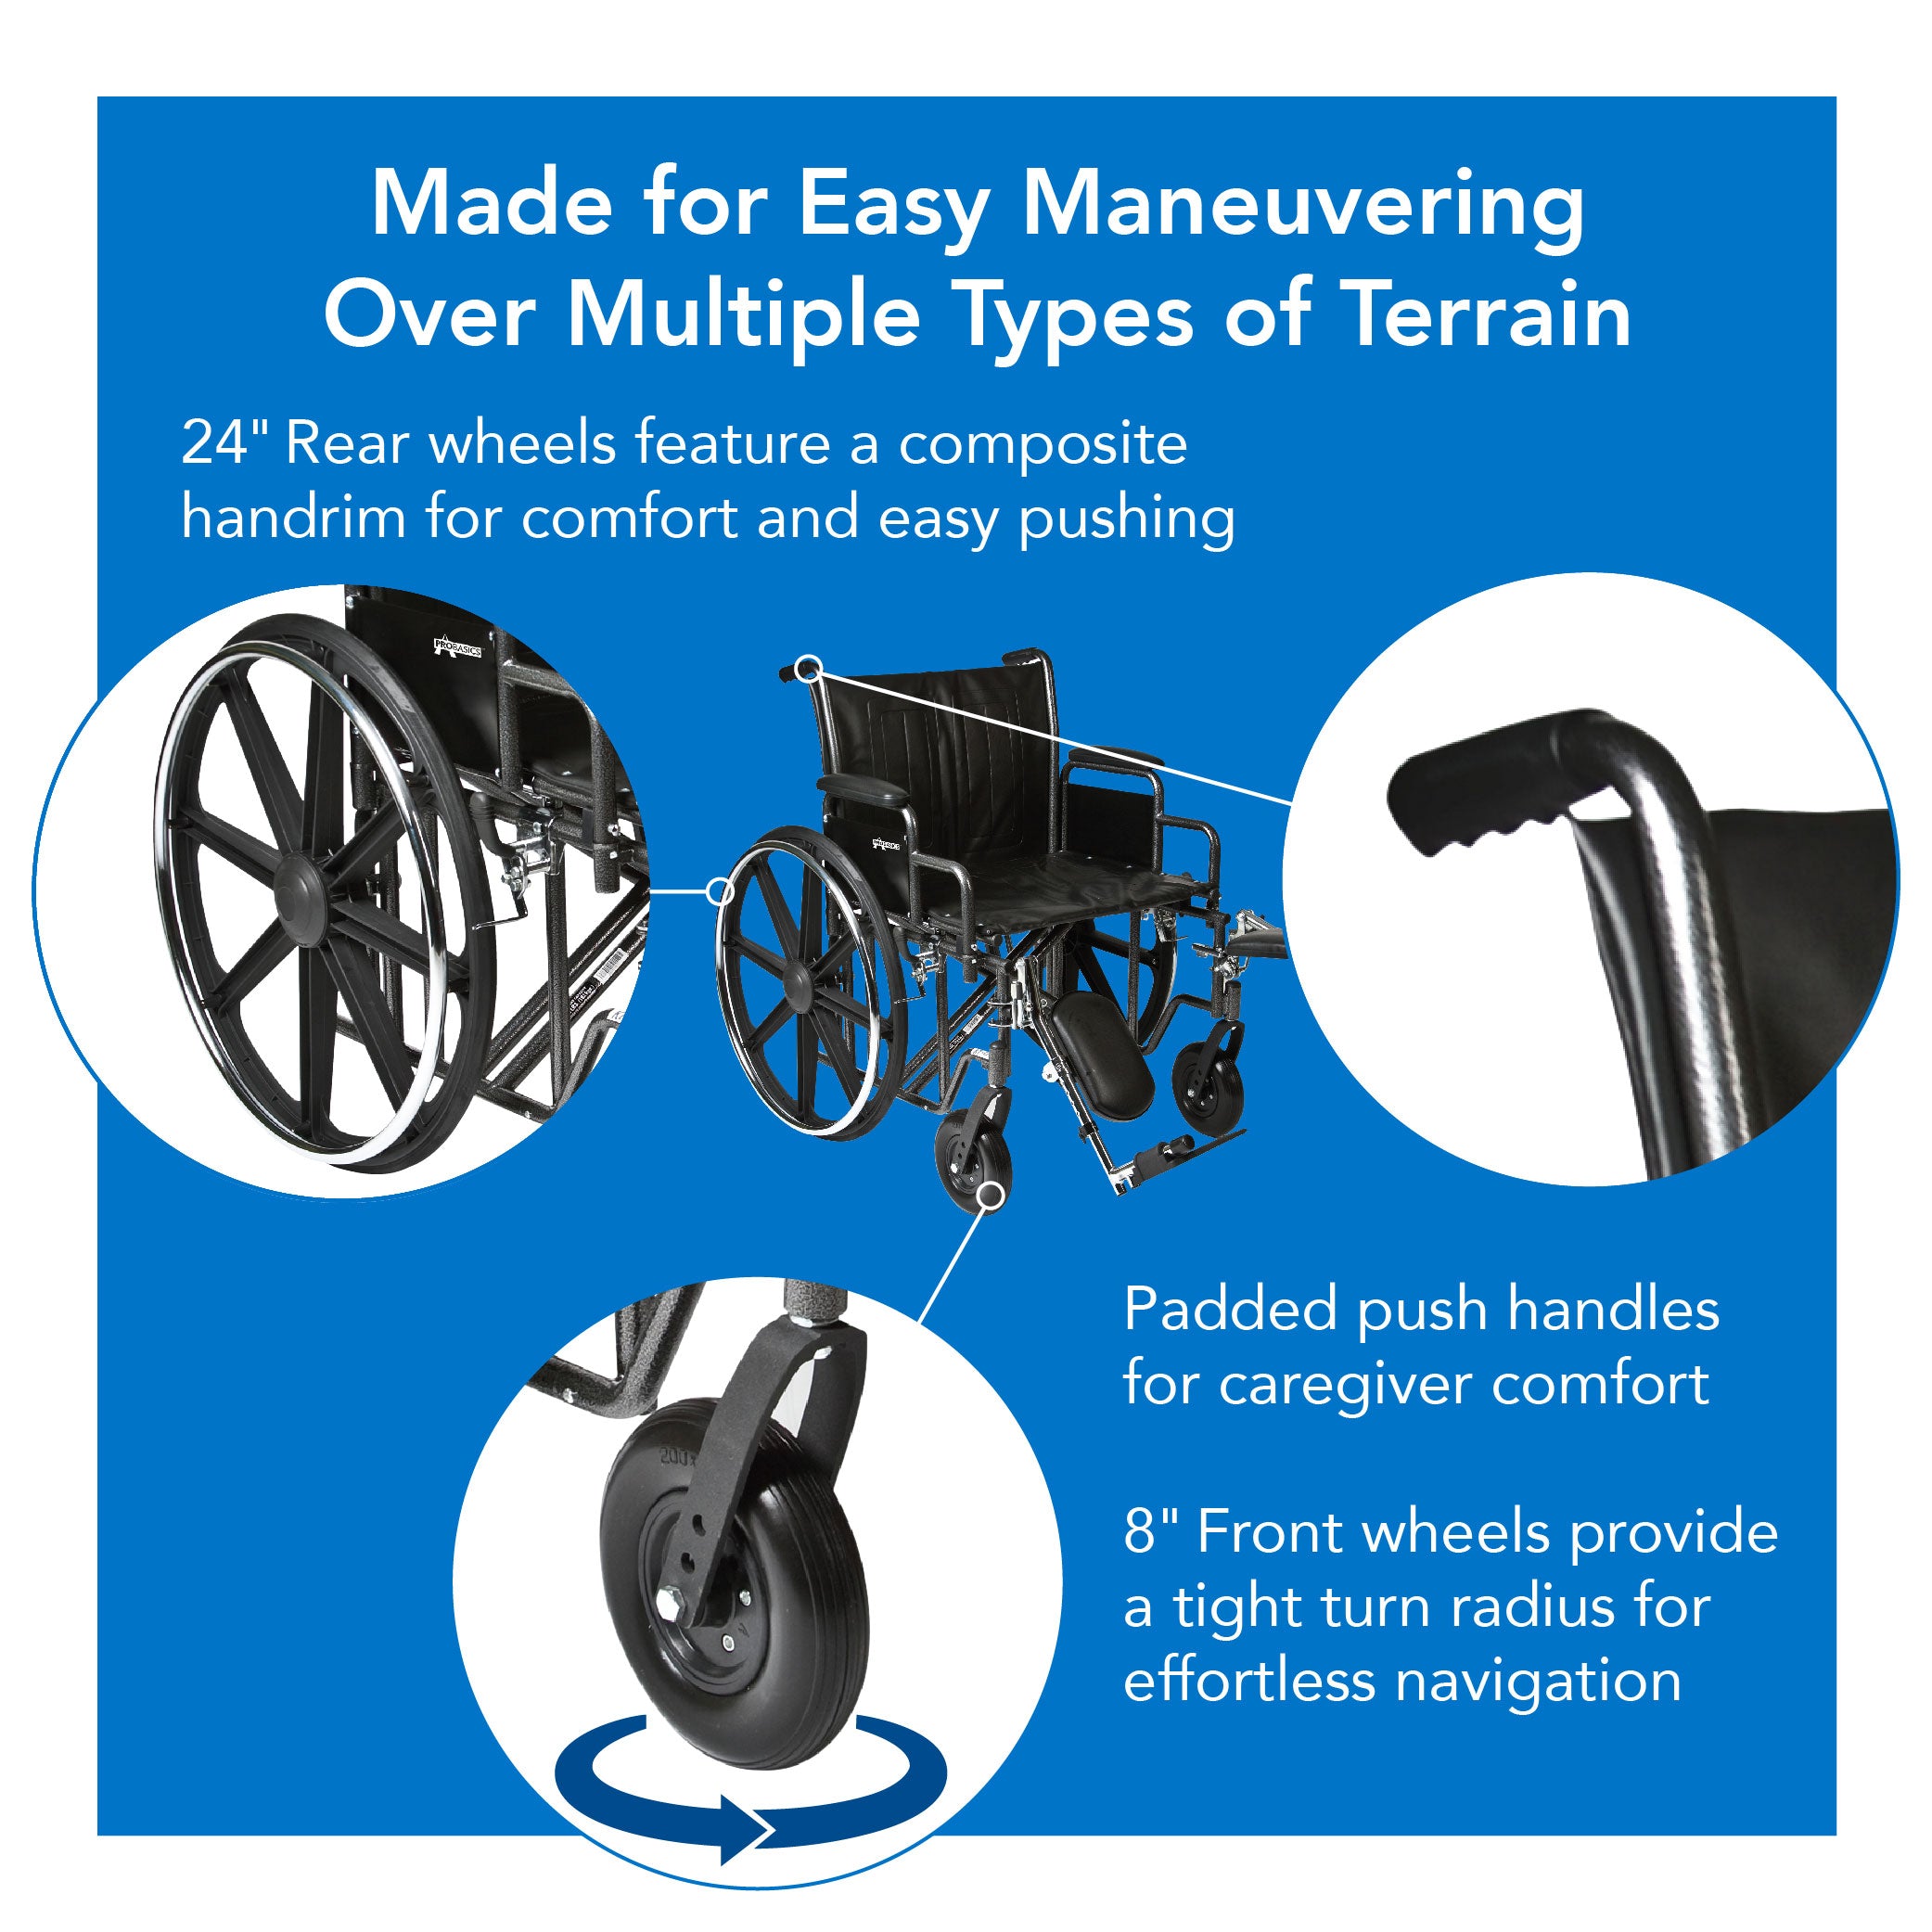 ProBasics K7 Heavy Duty Bariatric Extra-Wide Wheelchair - Carex Health Brands